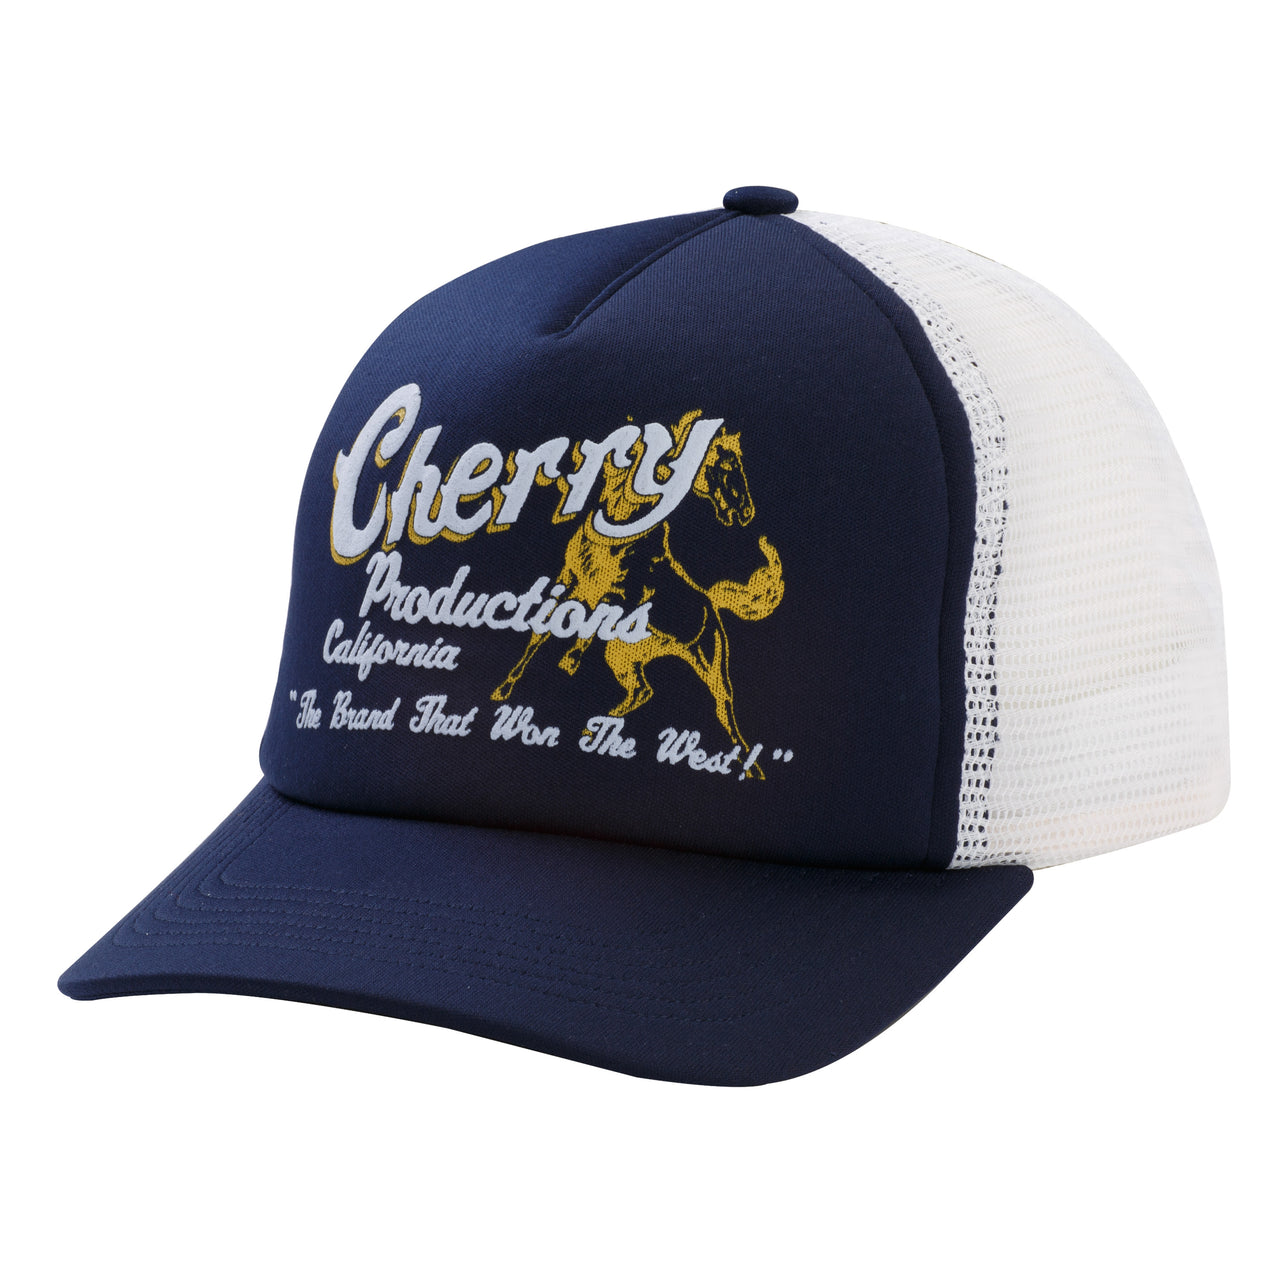 Cherry LA Cherry Productions Trucker Hat Blue White